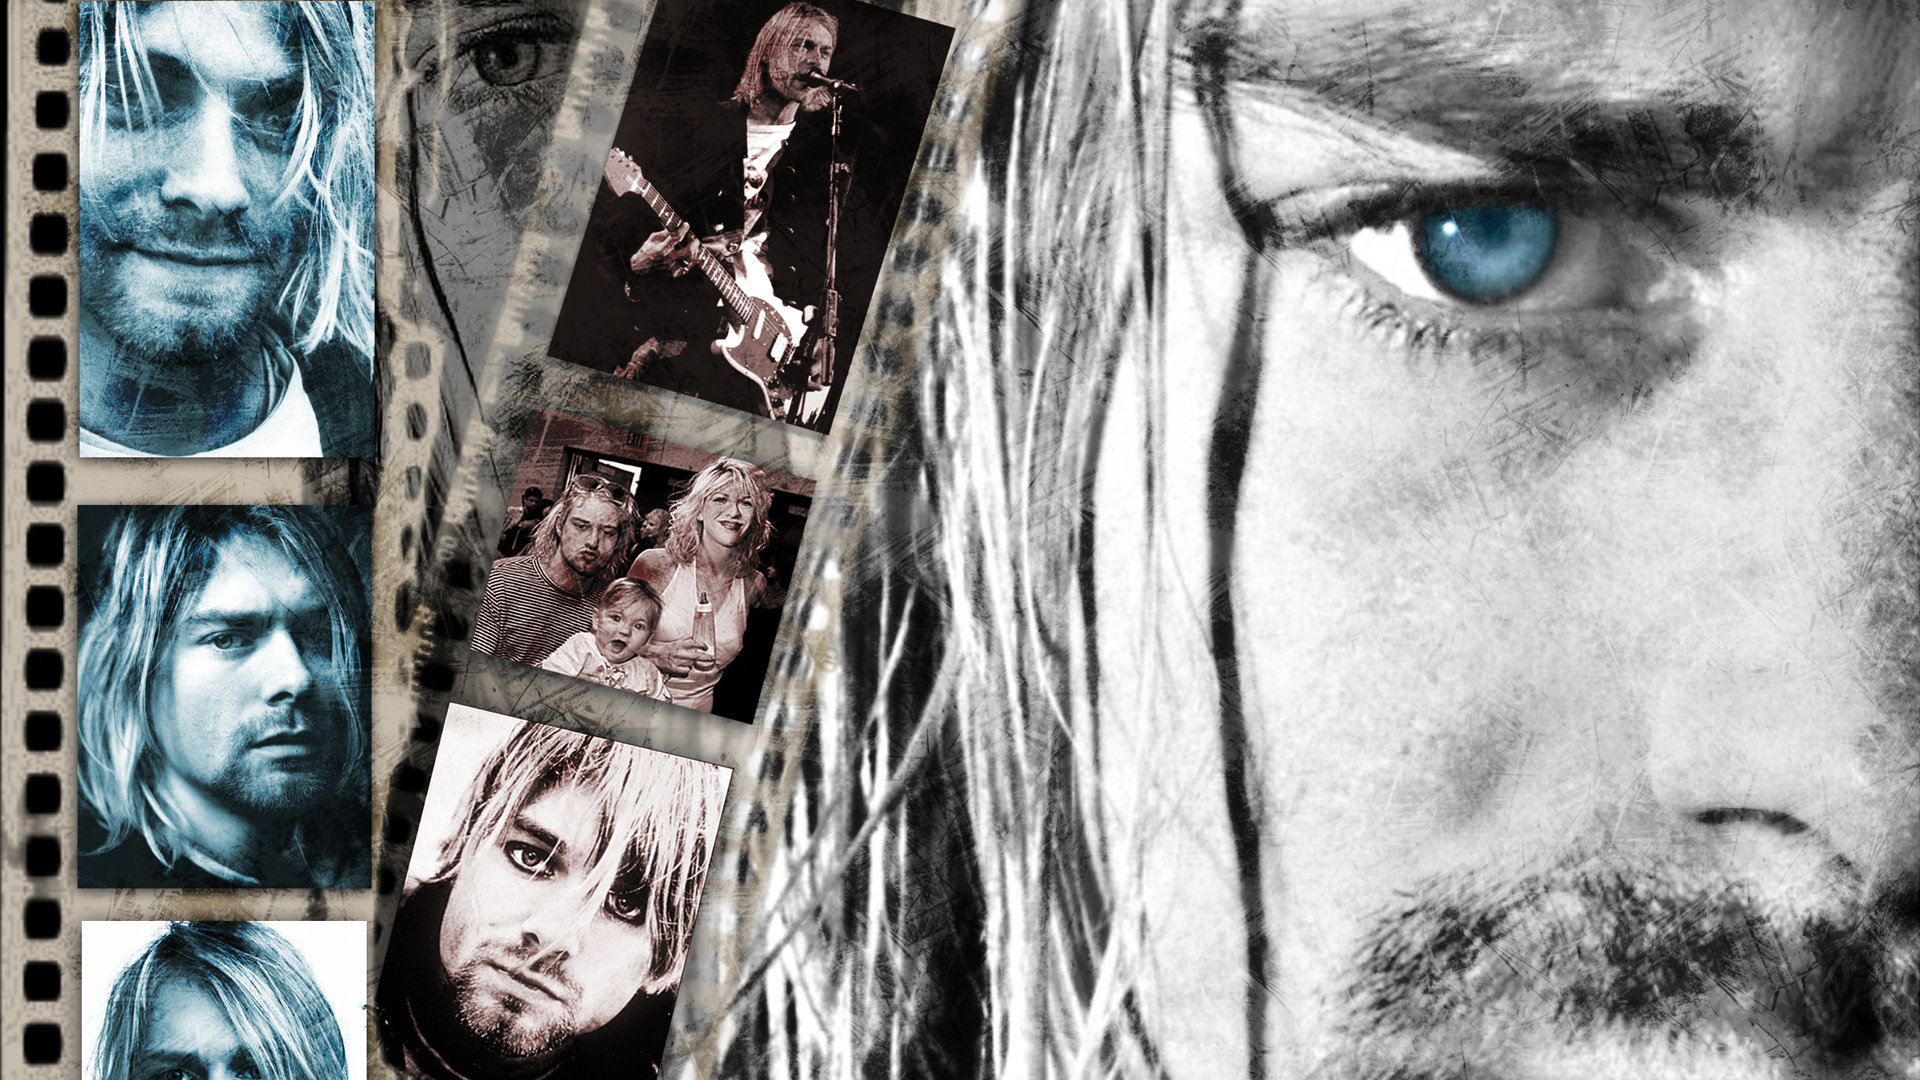 Wallpaper ID 750506  720P hd art rock Nirvana Music x  entertainment free download